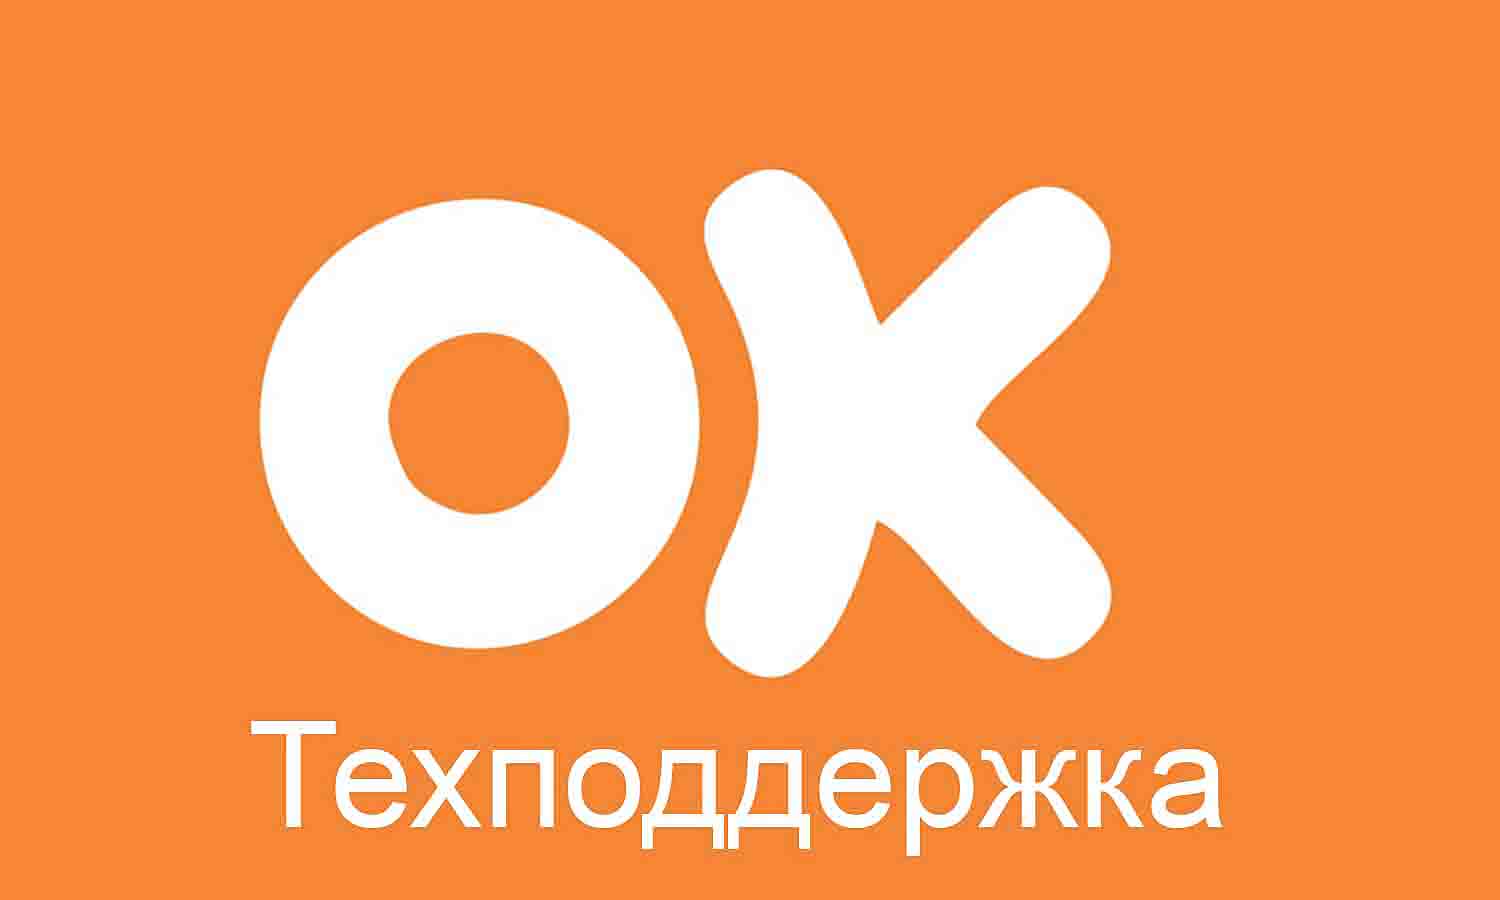 Служба поддержки Одноклассники